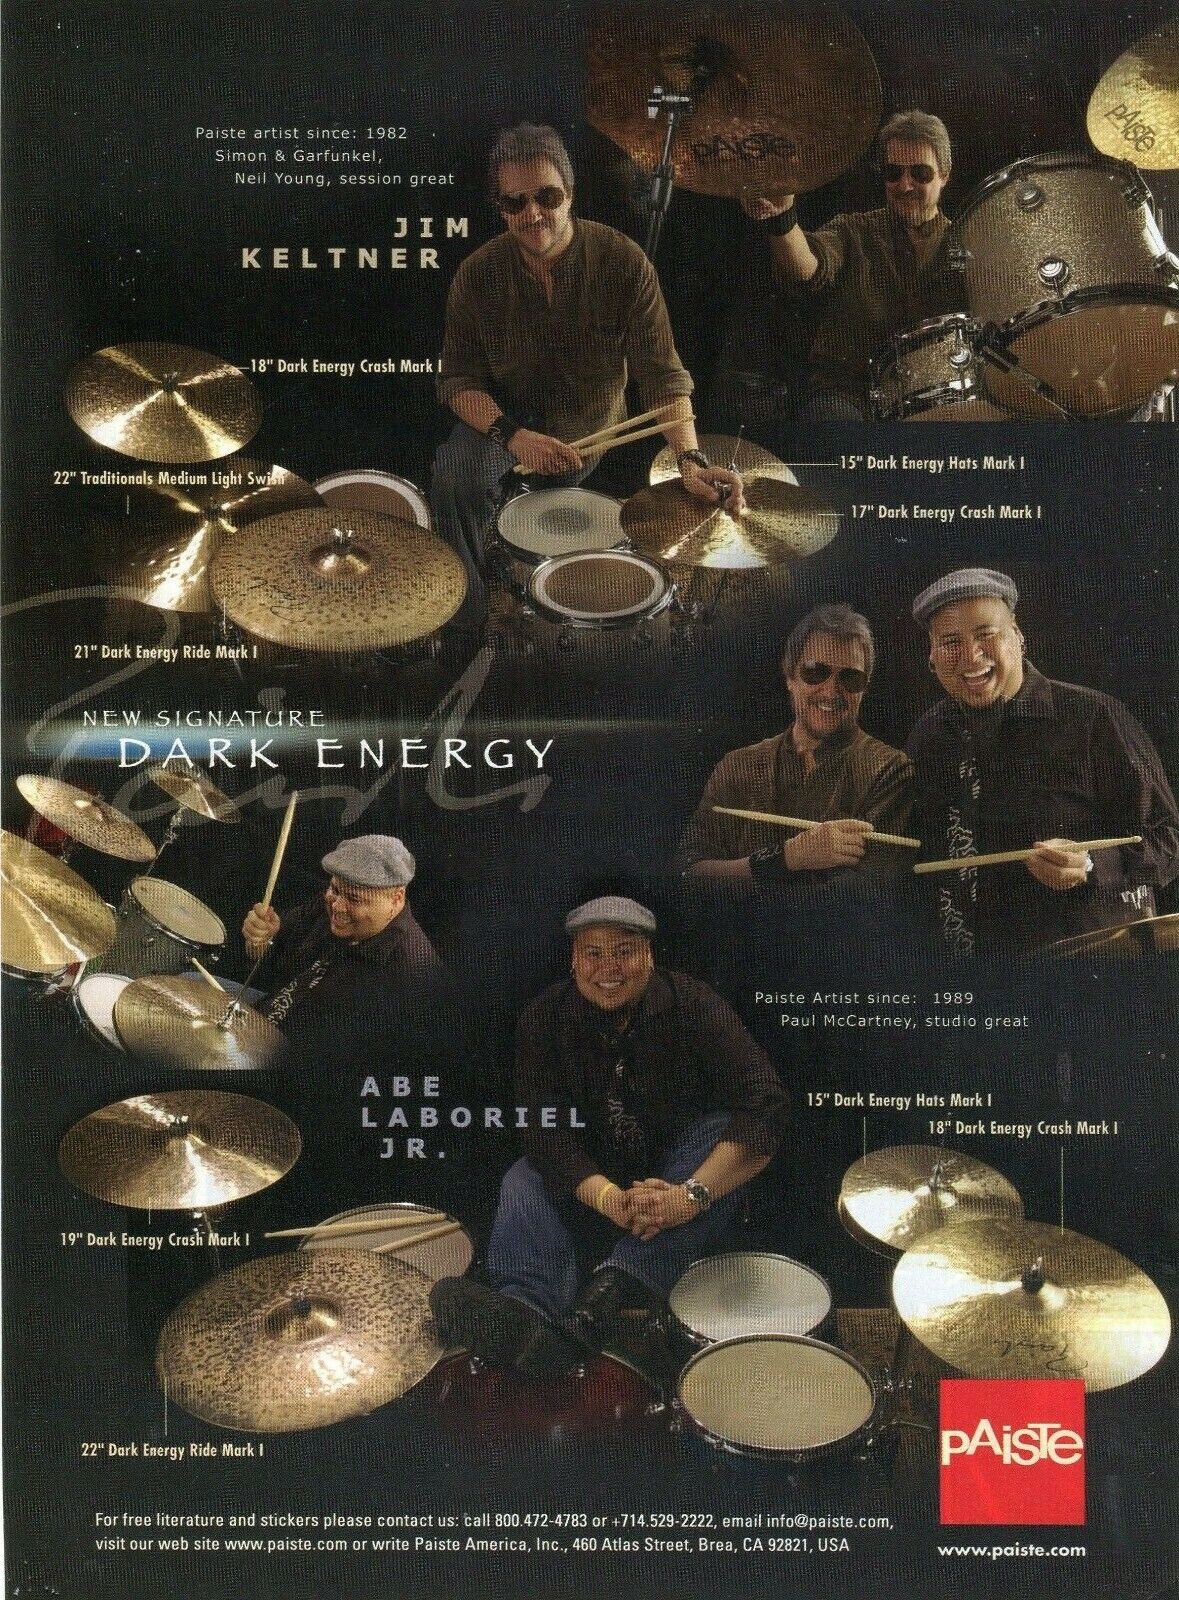 2005 Print Ad Paiste Dark Energy Drum Cymbal Setup w Jim Keltner Abe Laboriel Jr